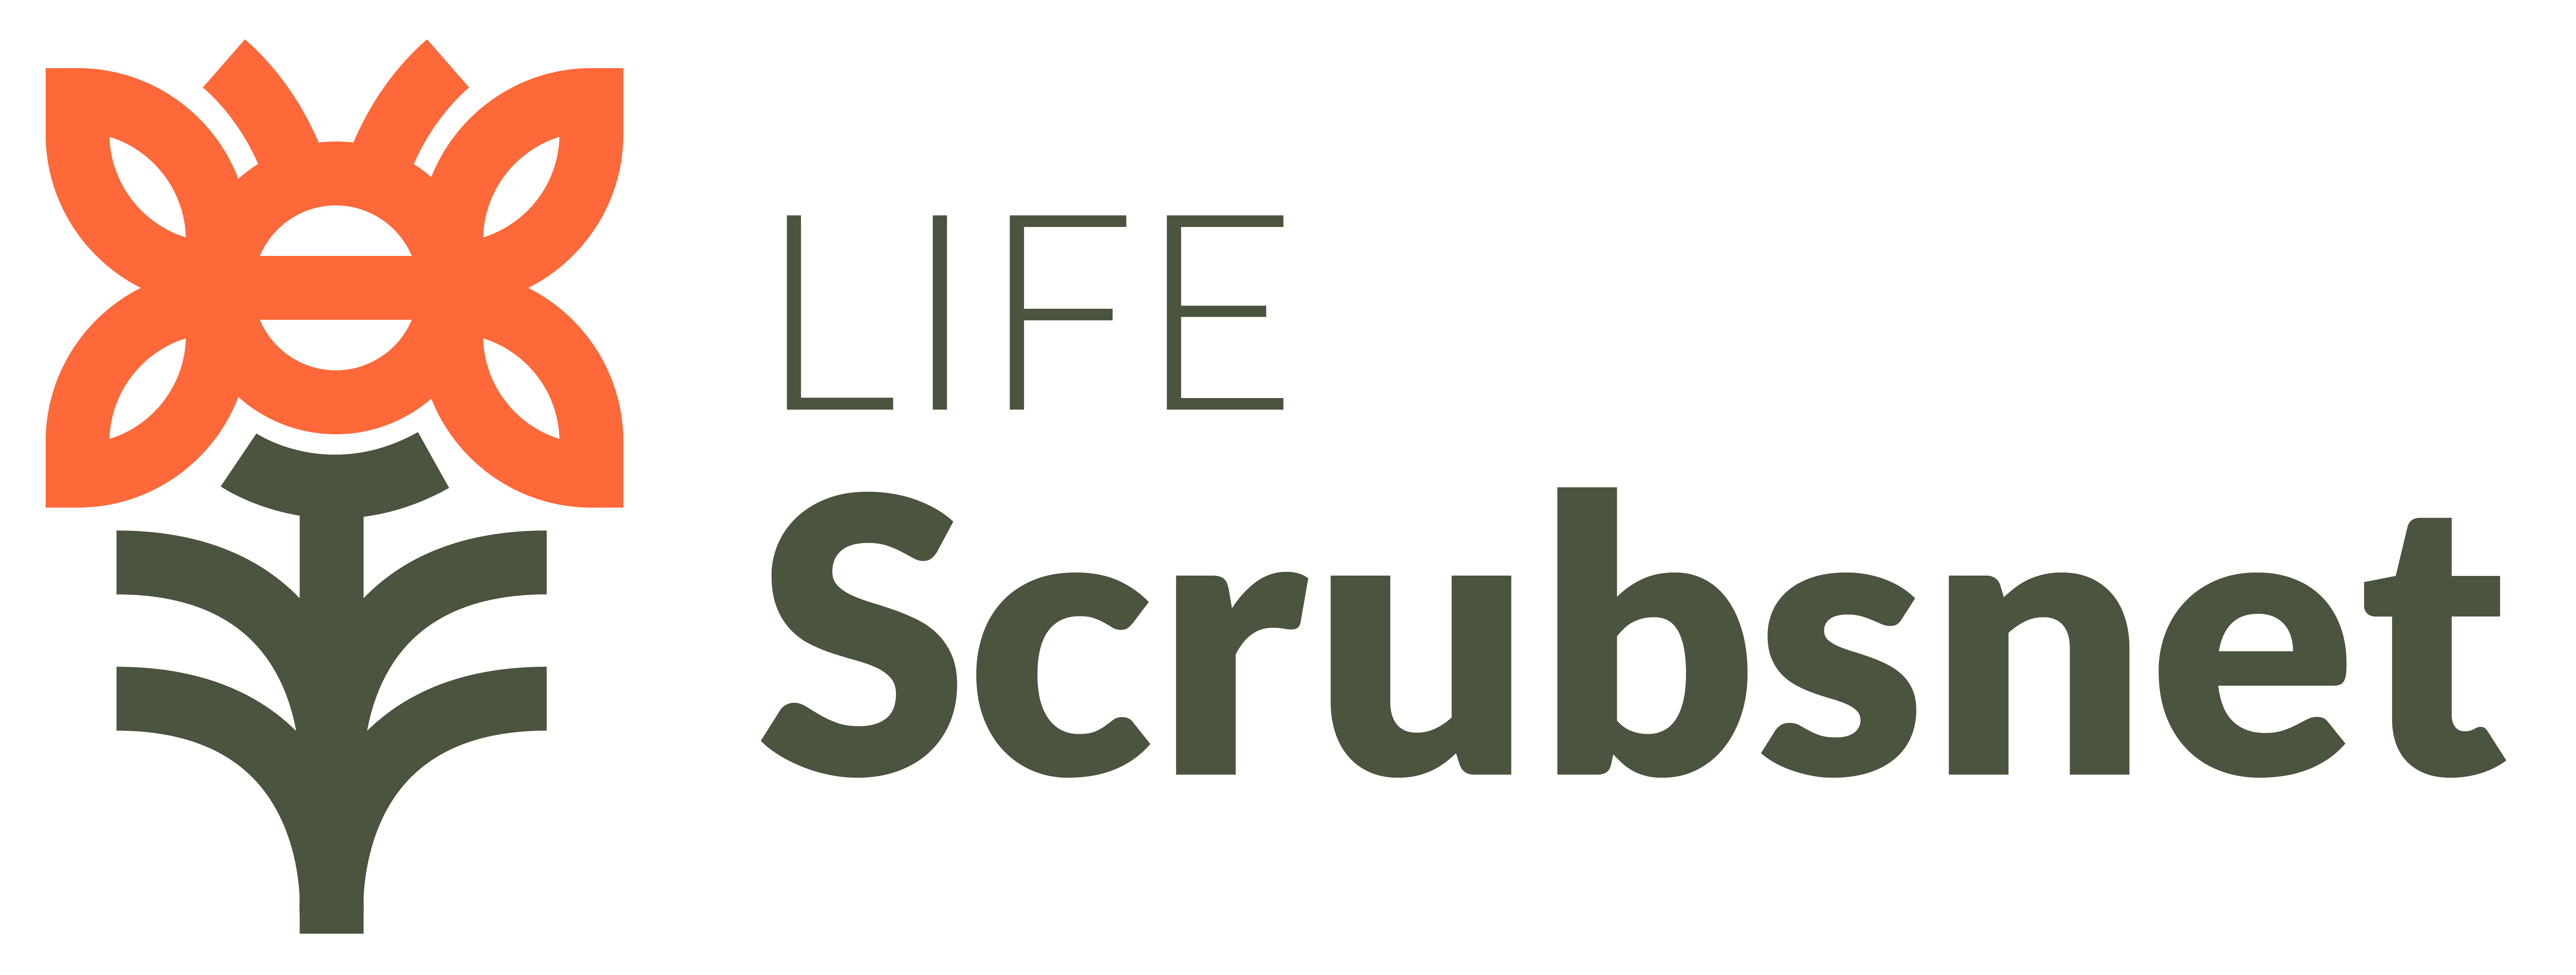 Life Scrubsnet logo